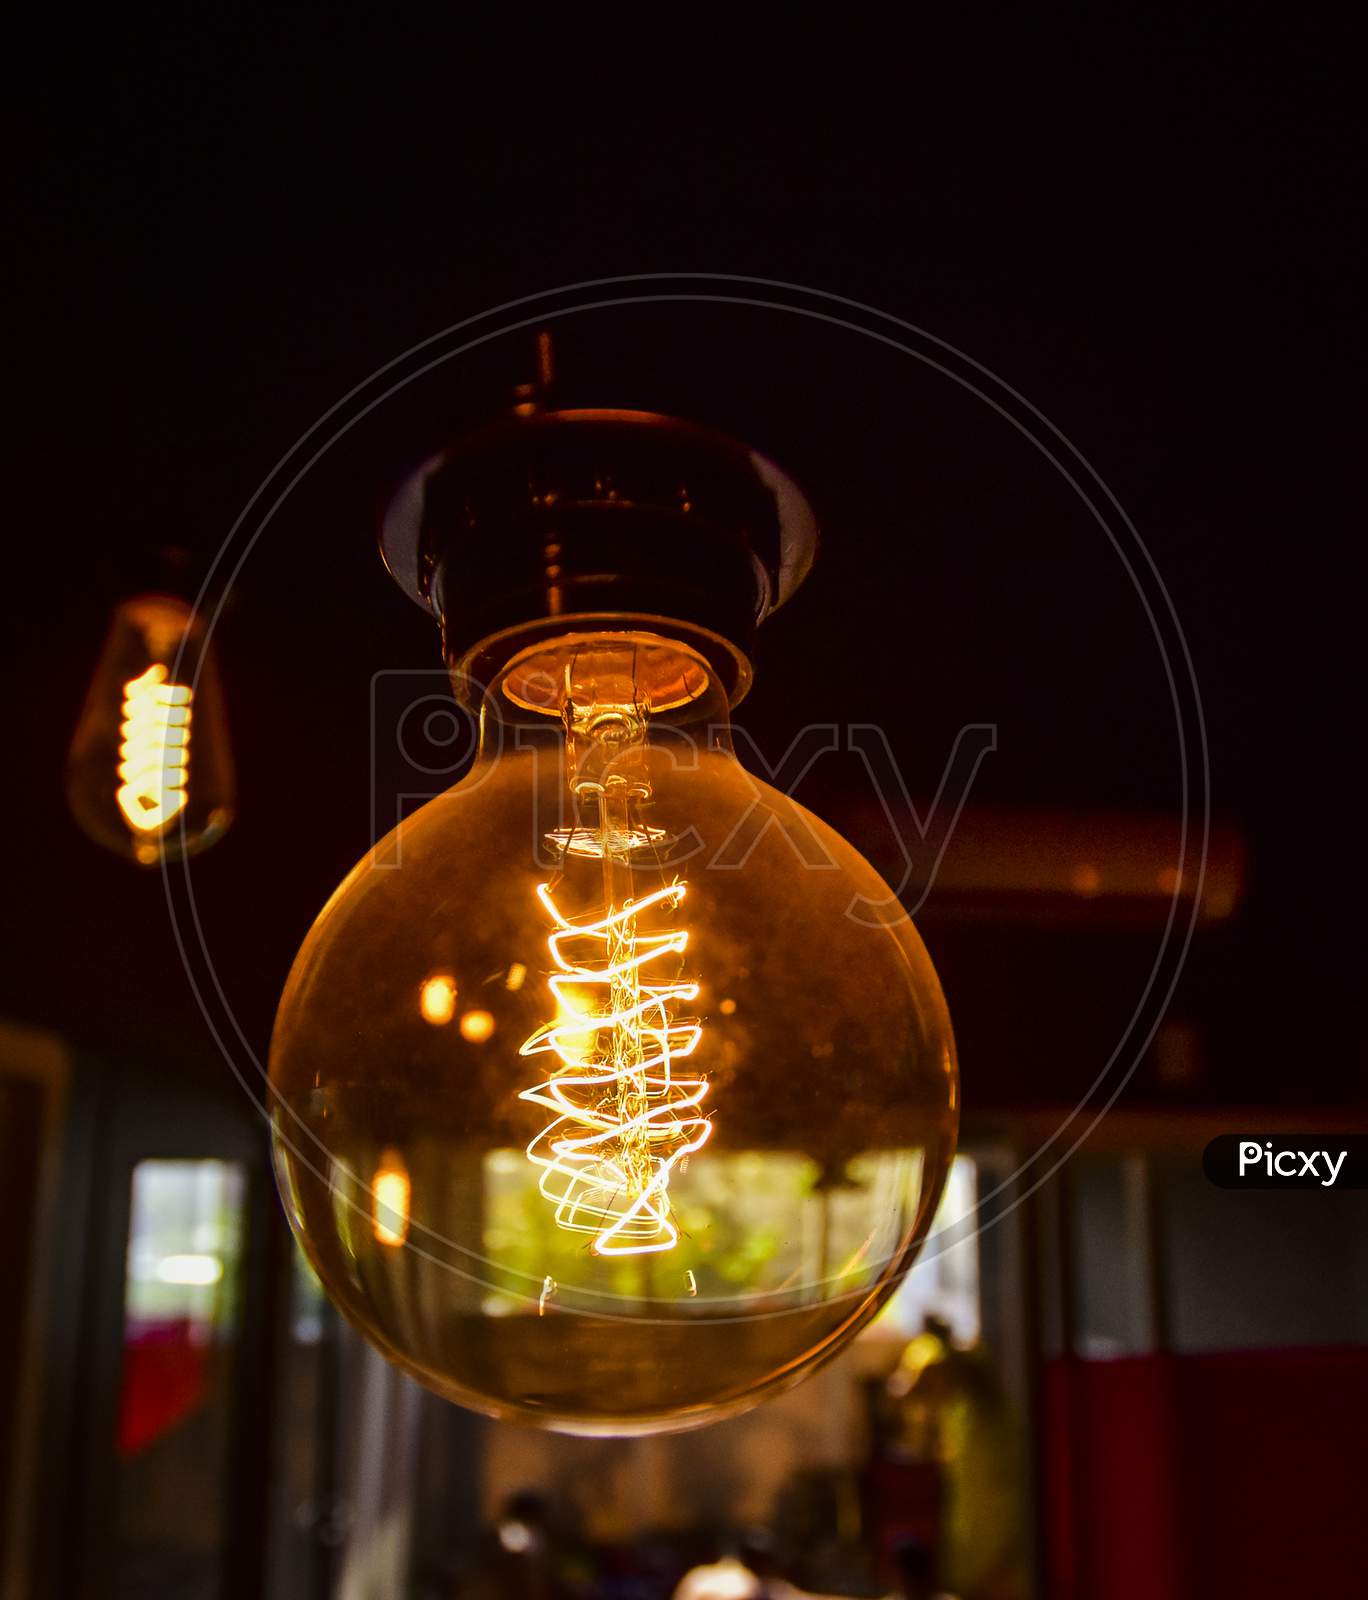 Eletric Filament Bulb  in a Cafe Interior